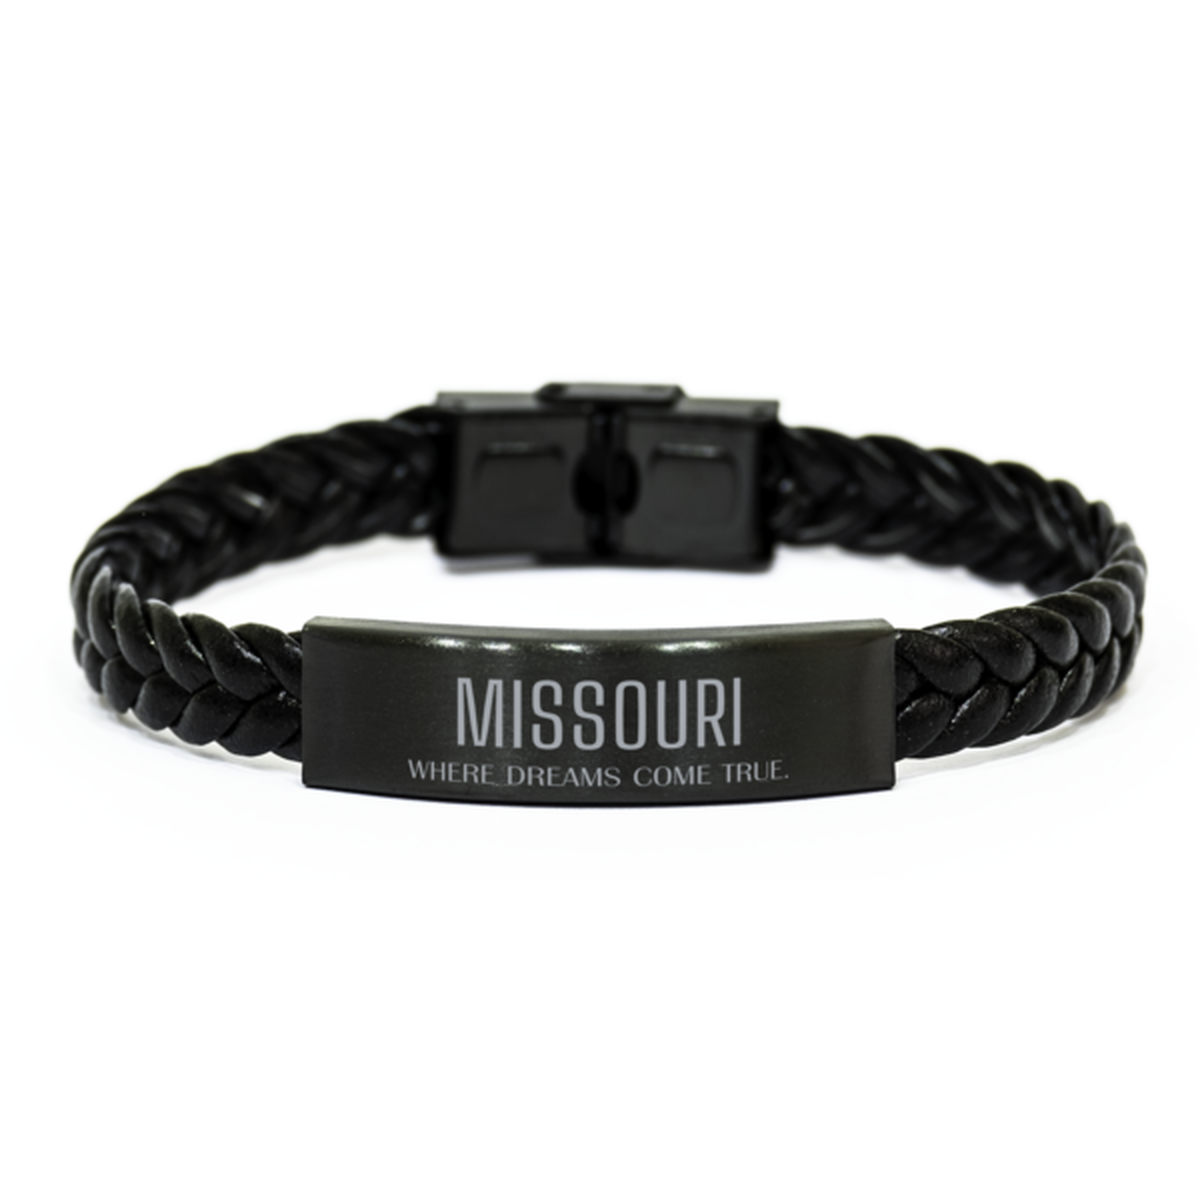 Love Missouri State Braided Leather Bracelet, Missouri Where dreams come true, Birthday Inspirational Gifts For Missouri Men, Women, Friends